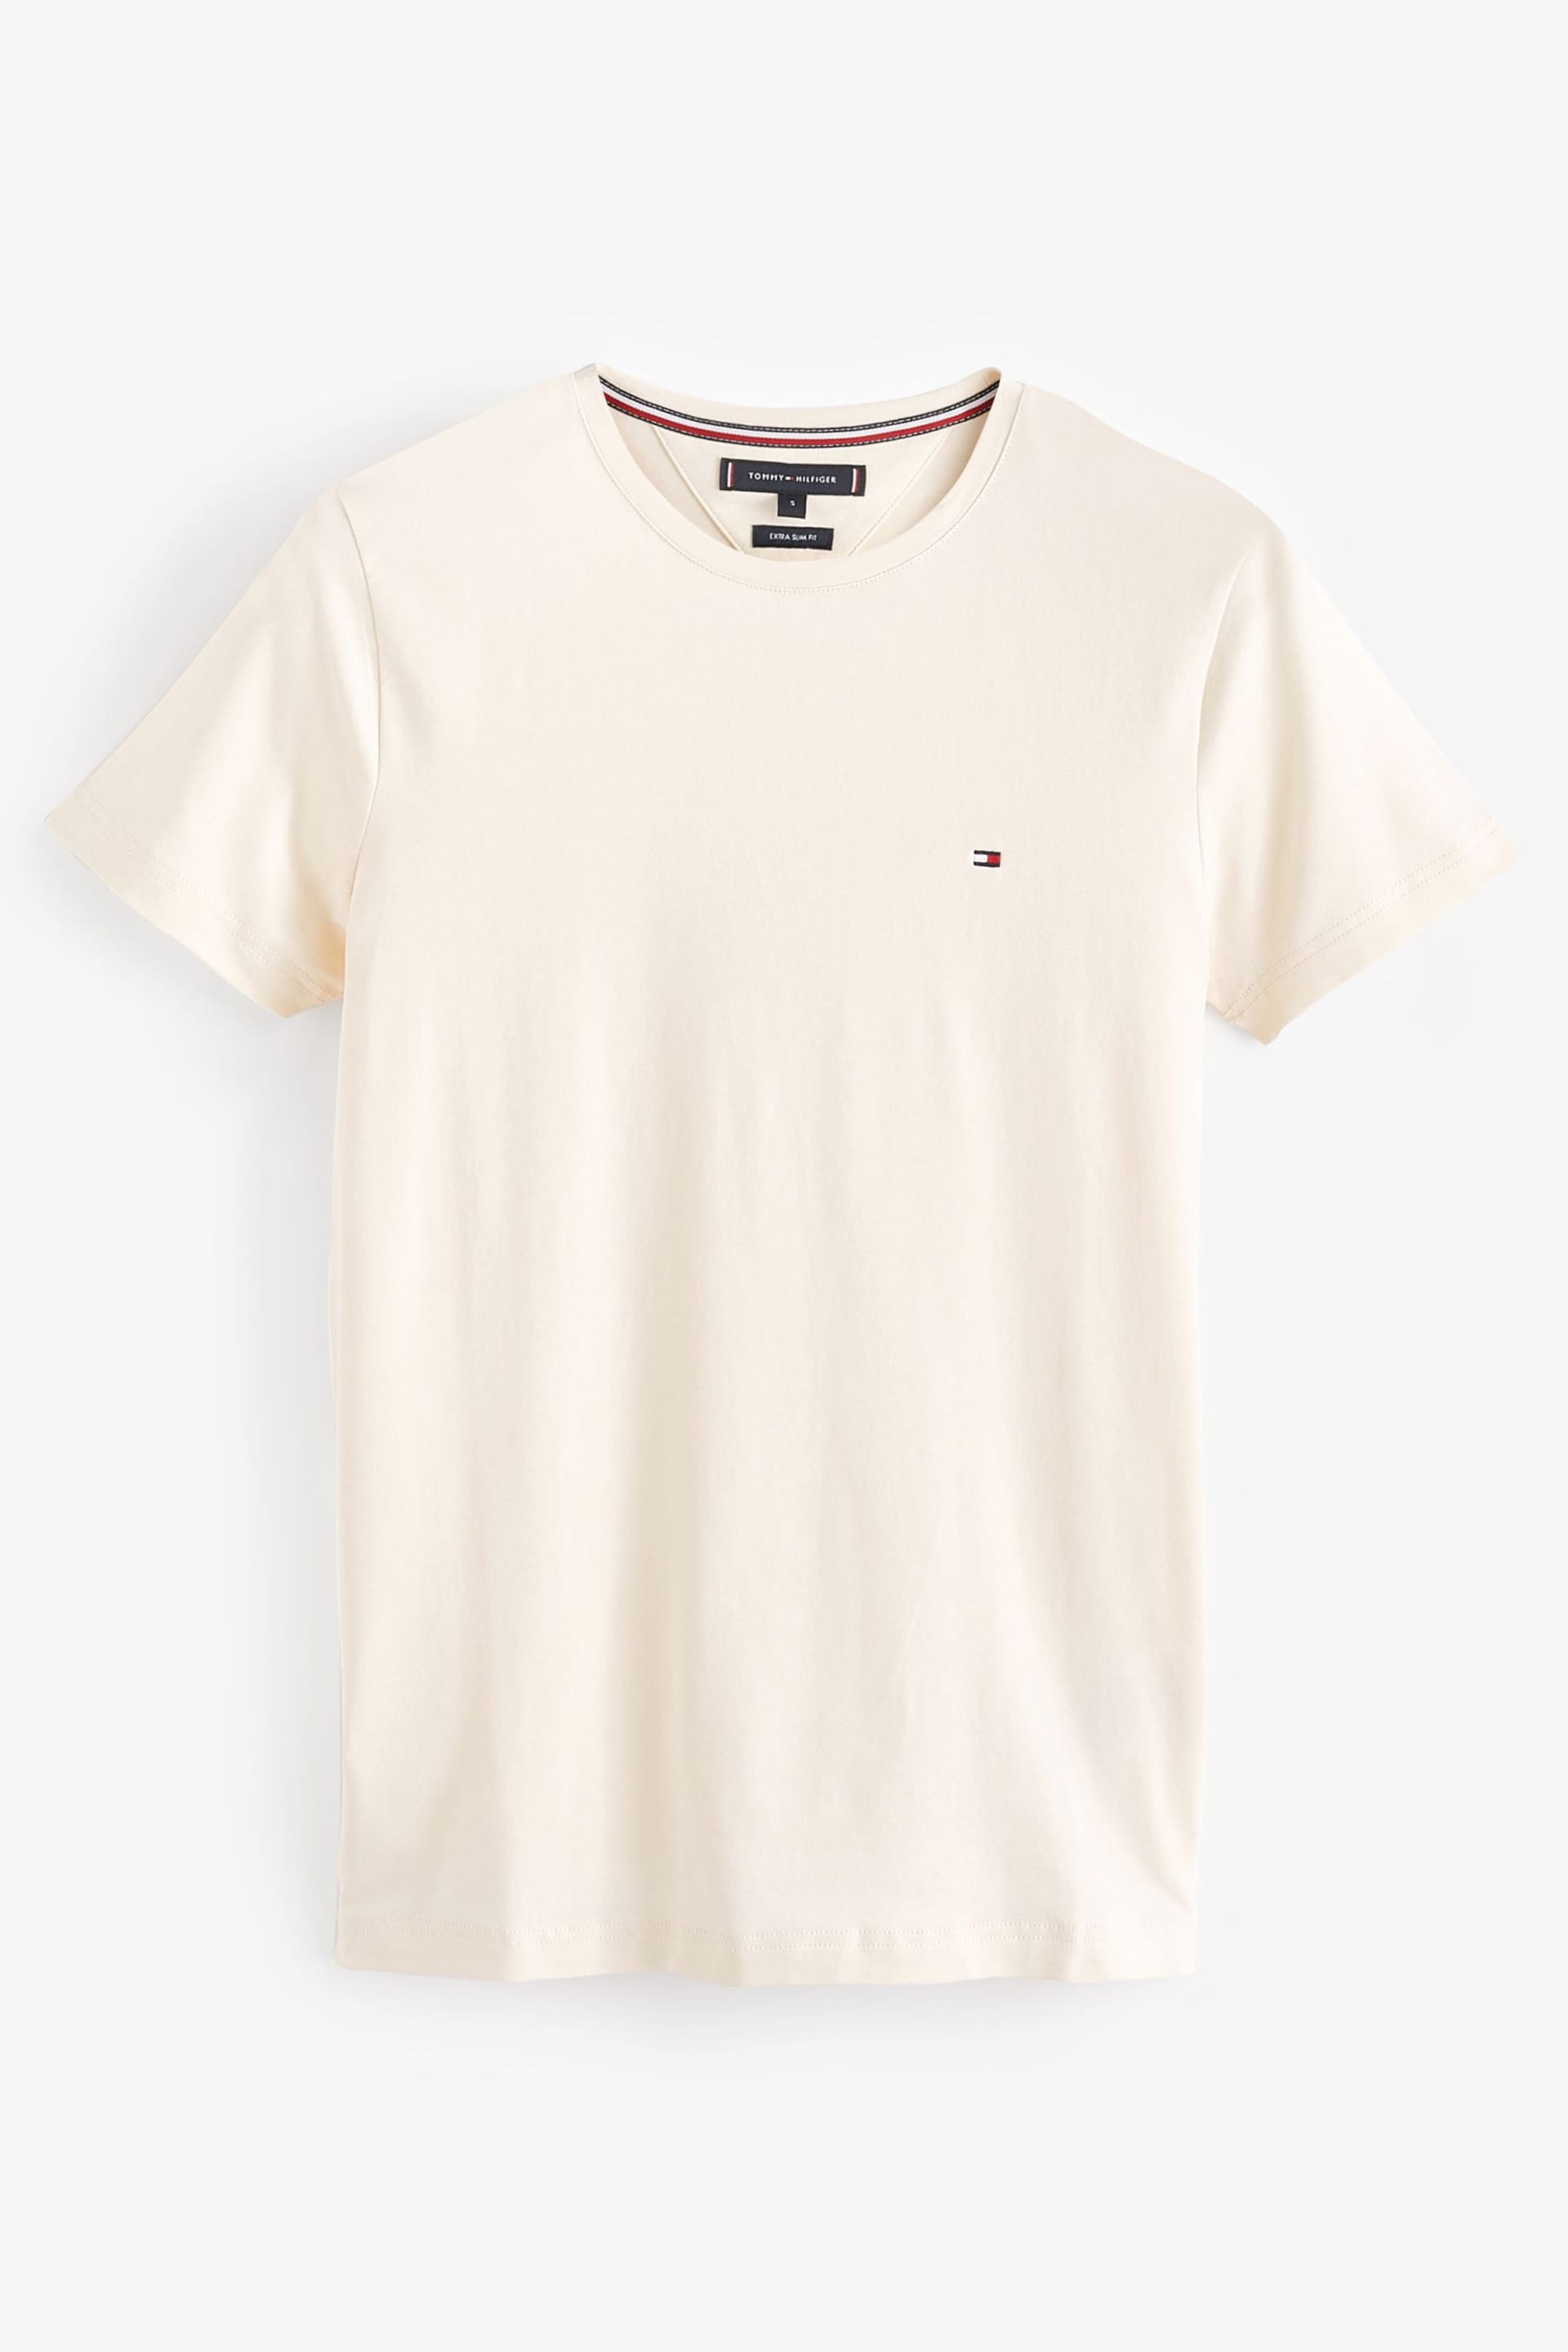 Tommy Hilfiger Slim Fit Stretch T-Shirt - Image 3 of 3